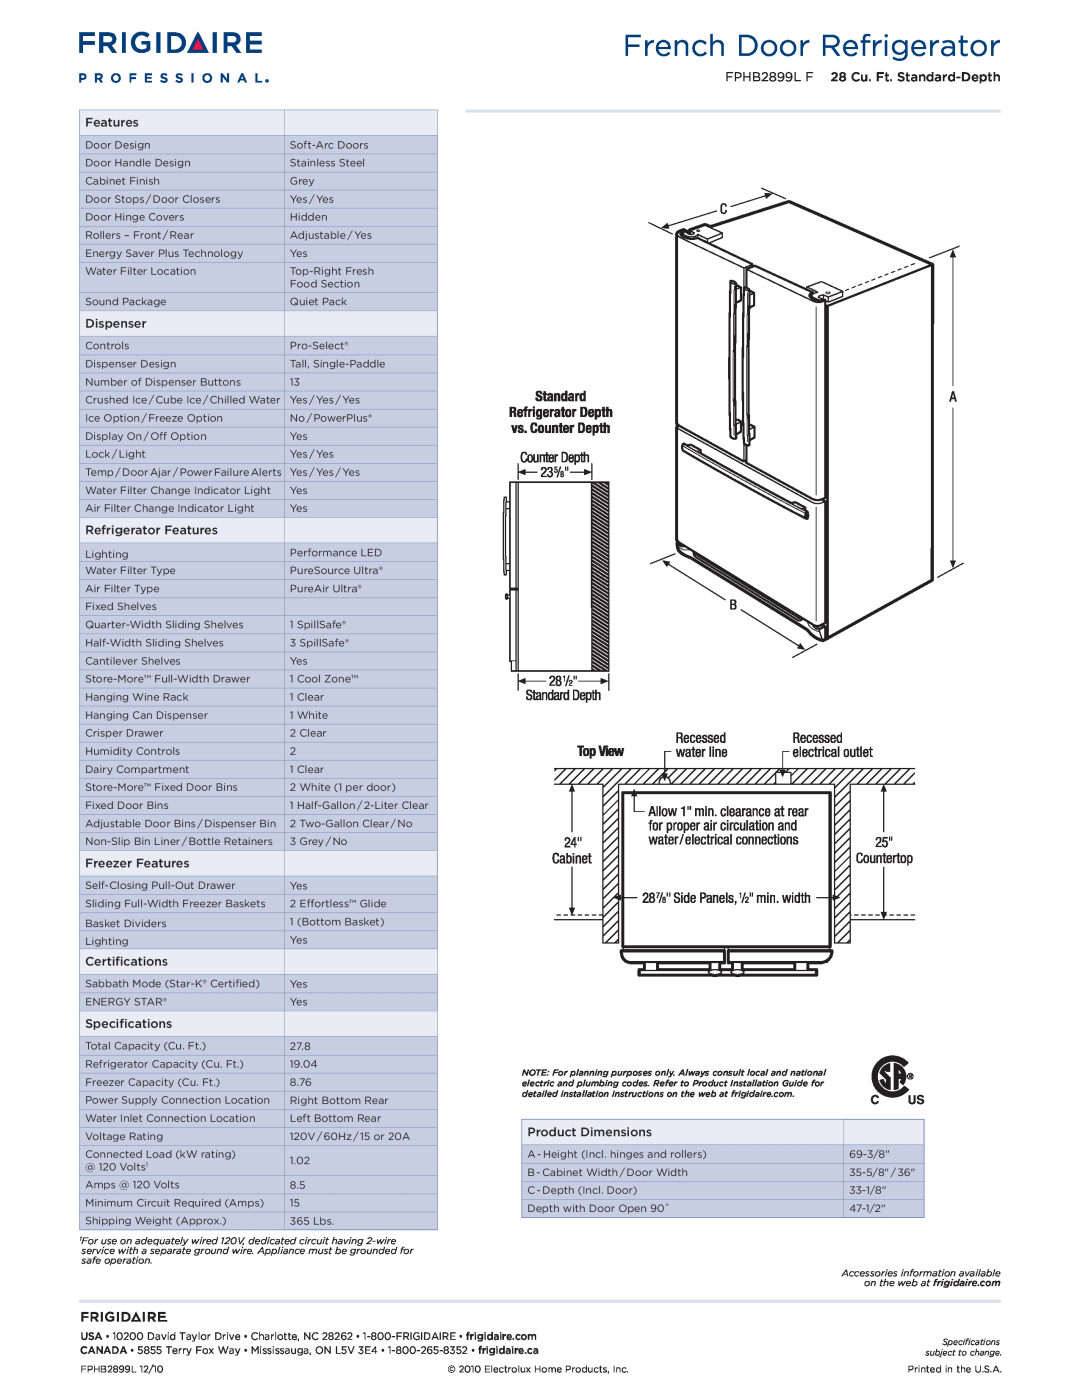 Frigidaire FPHB2899LF dimensions French Door Refrigerator, FPHB2899L F 28 Cu. Ft. Standard-Depth 